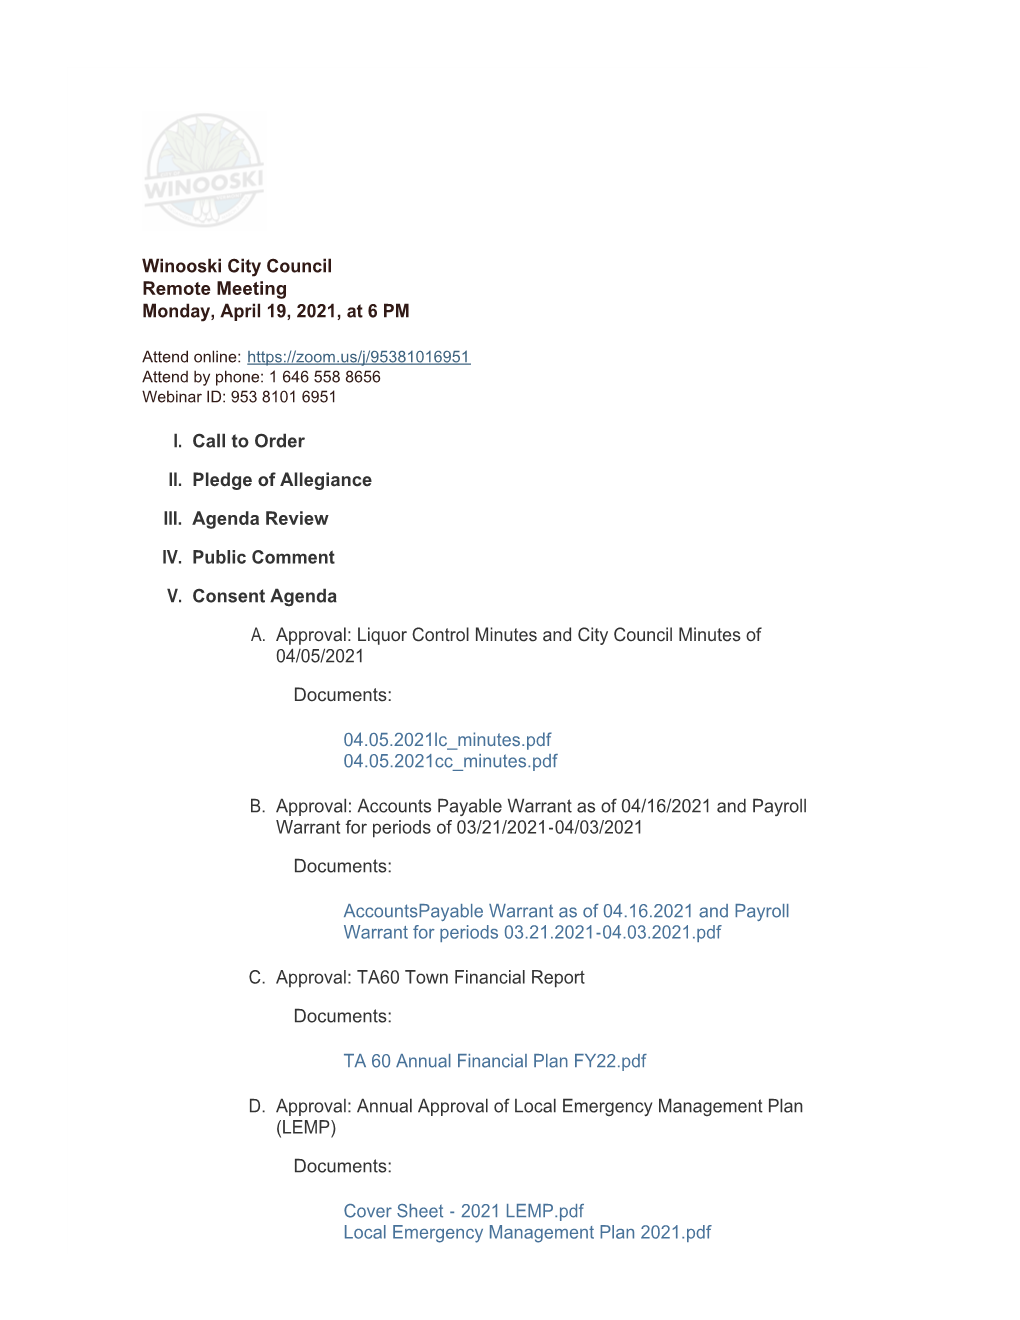 Winooski City Council Remote Meeting Monday, April 19, 2021, at 6 PM